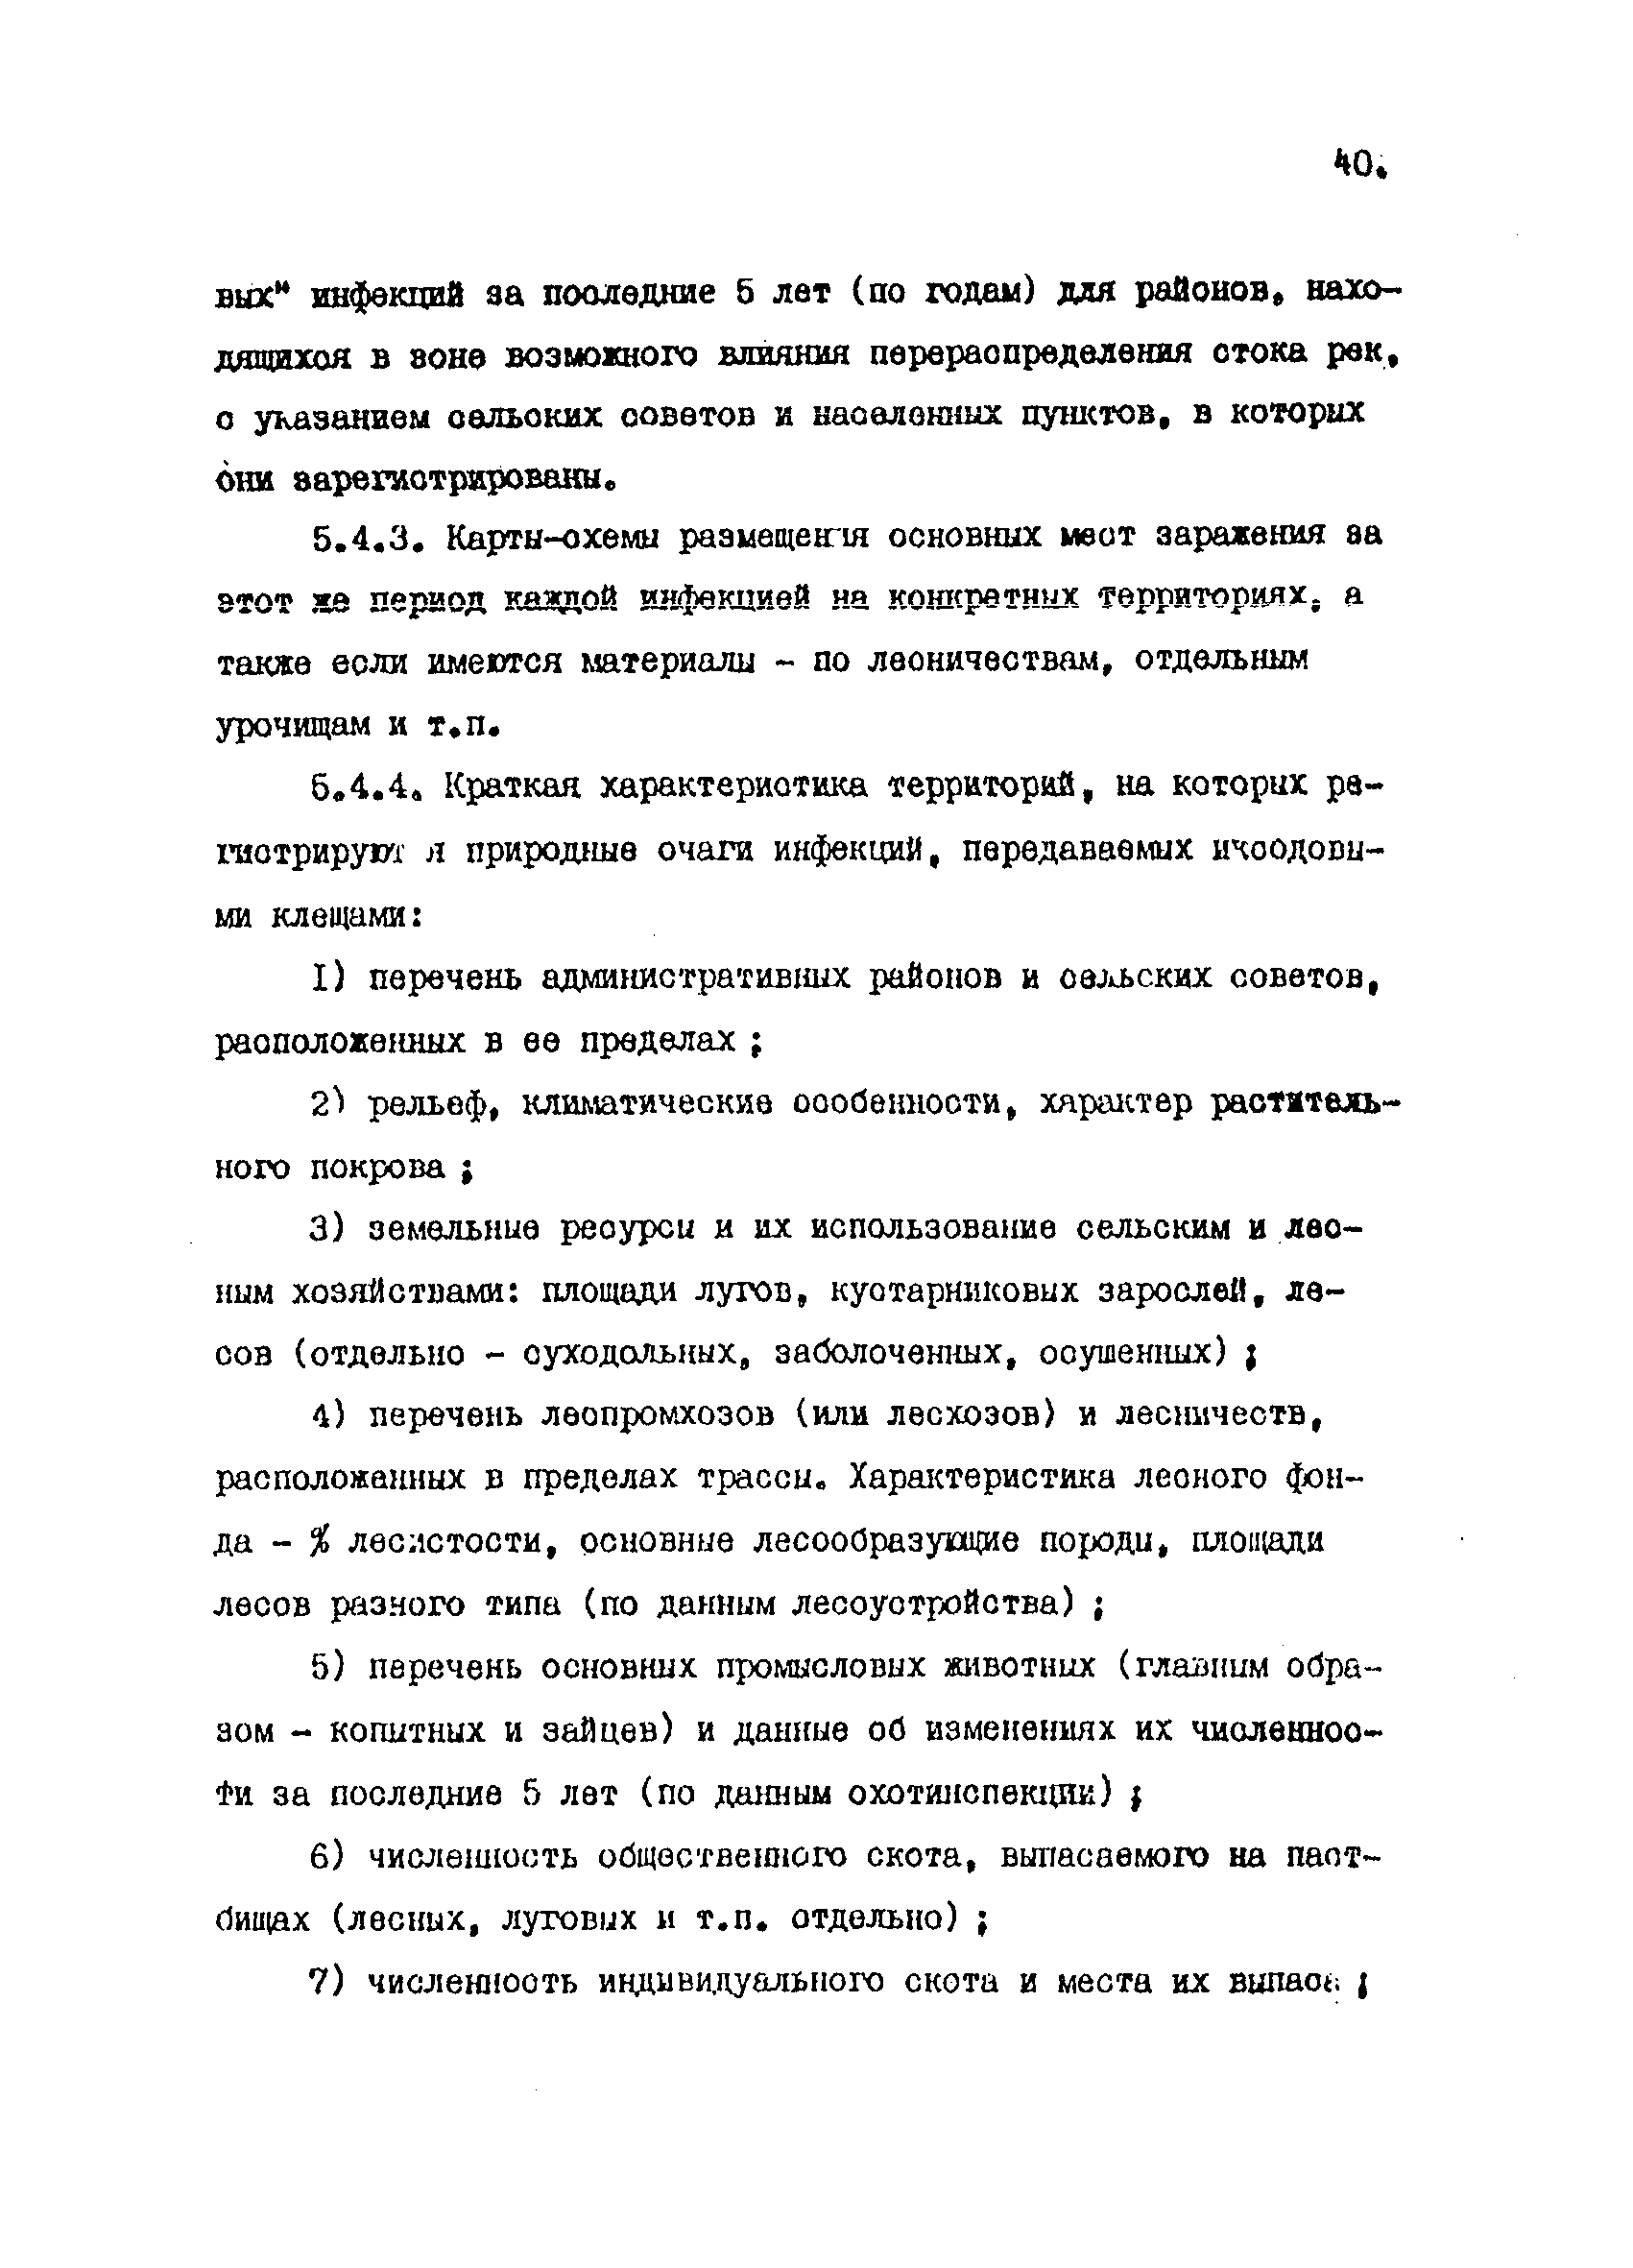 ВМУ 2685-83